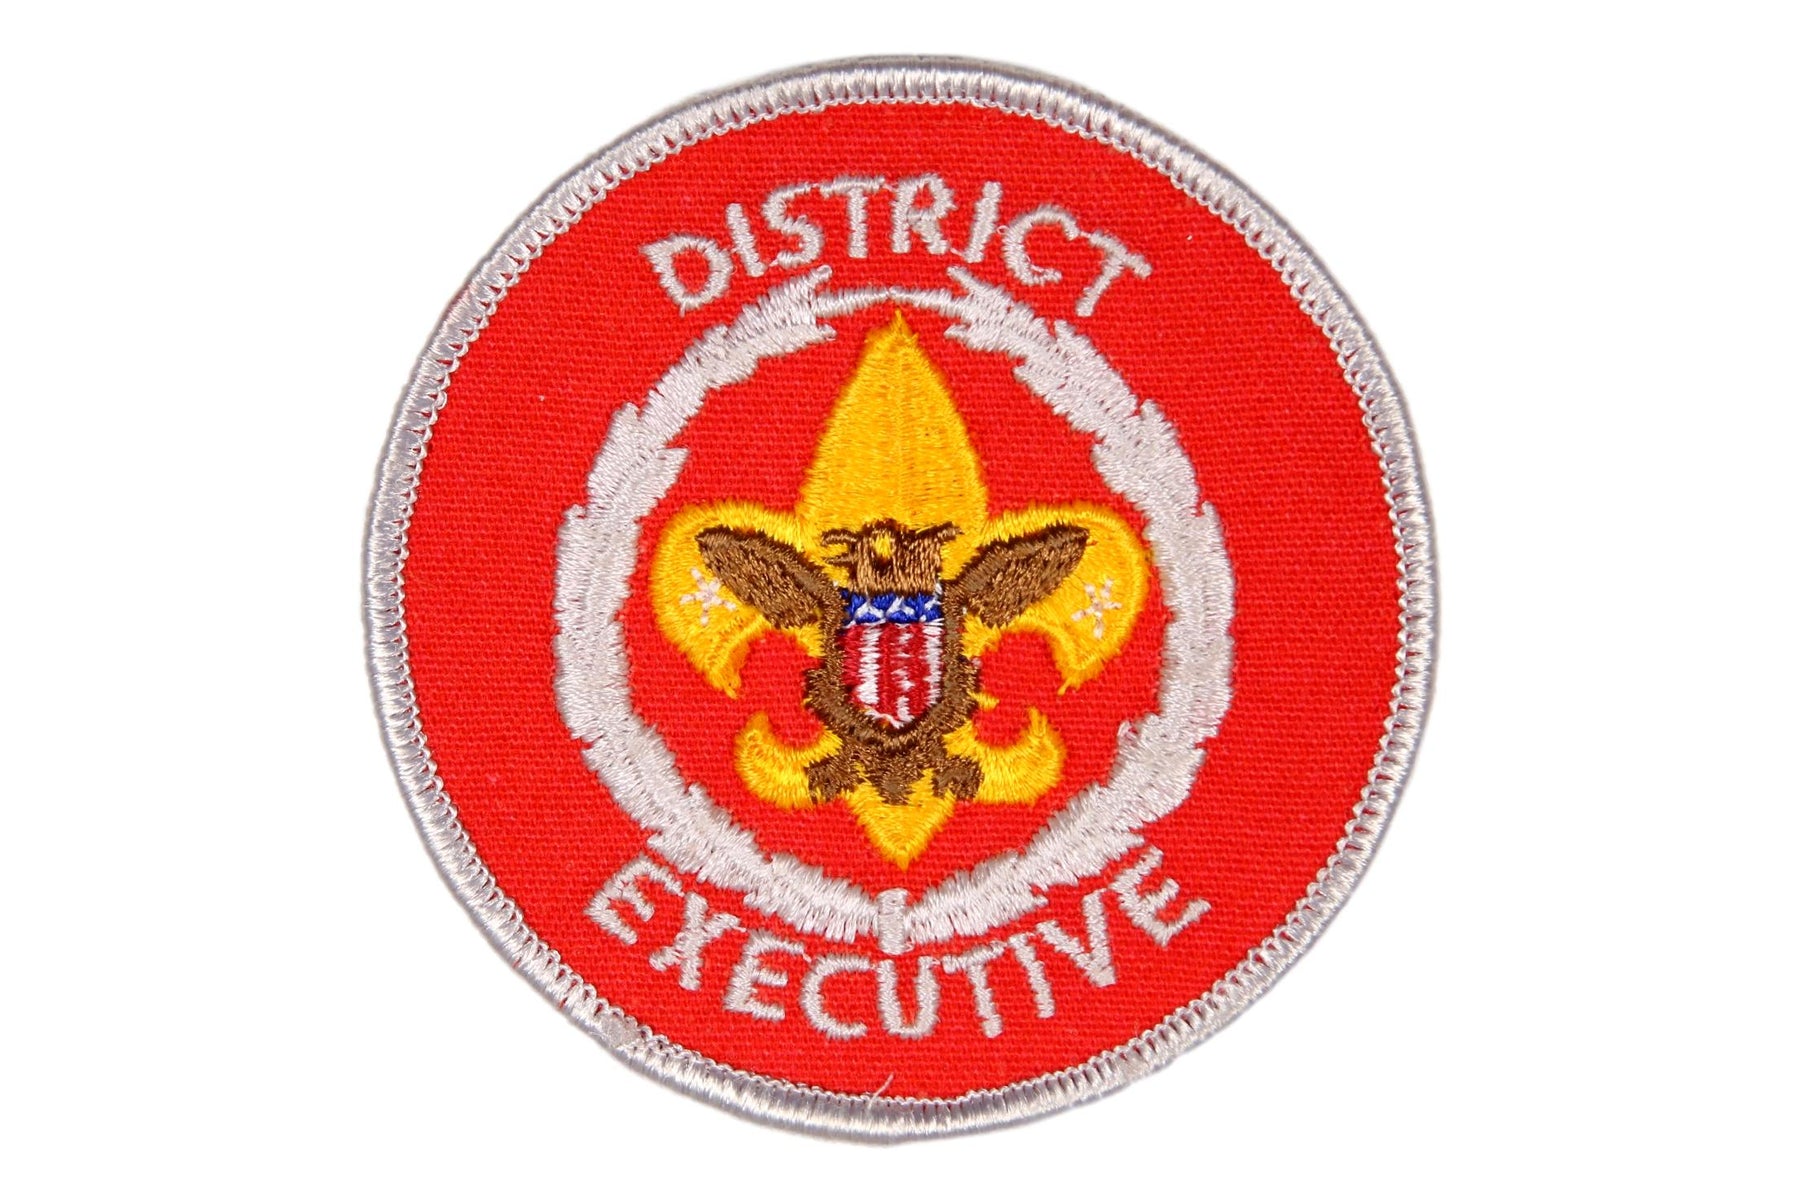 District Executive Patch